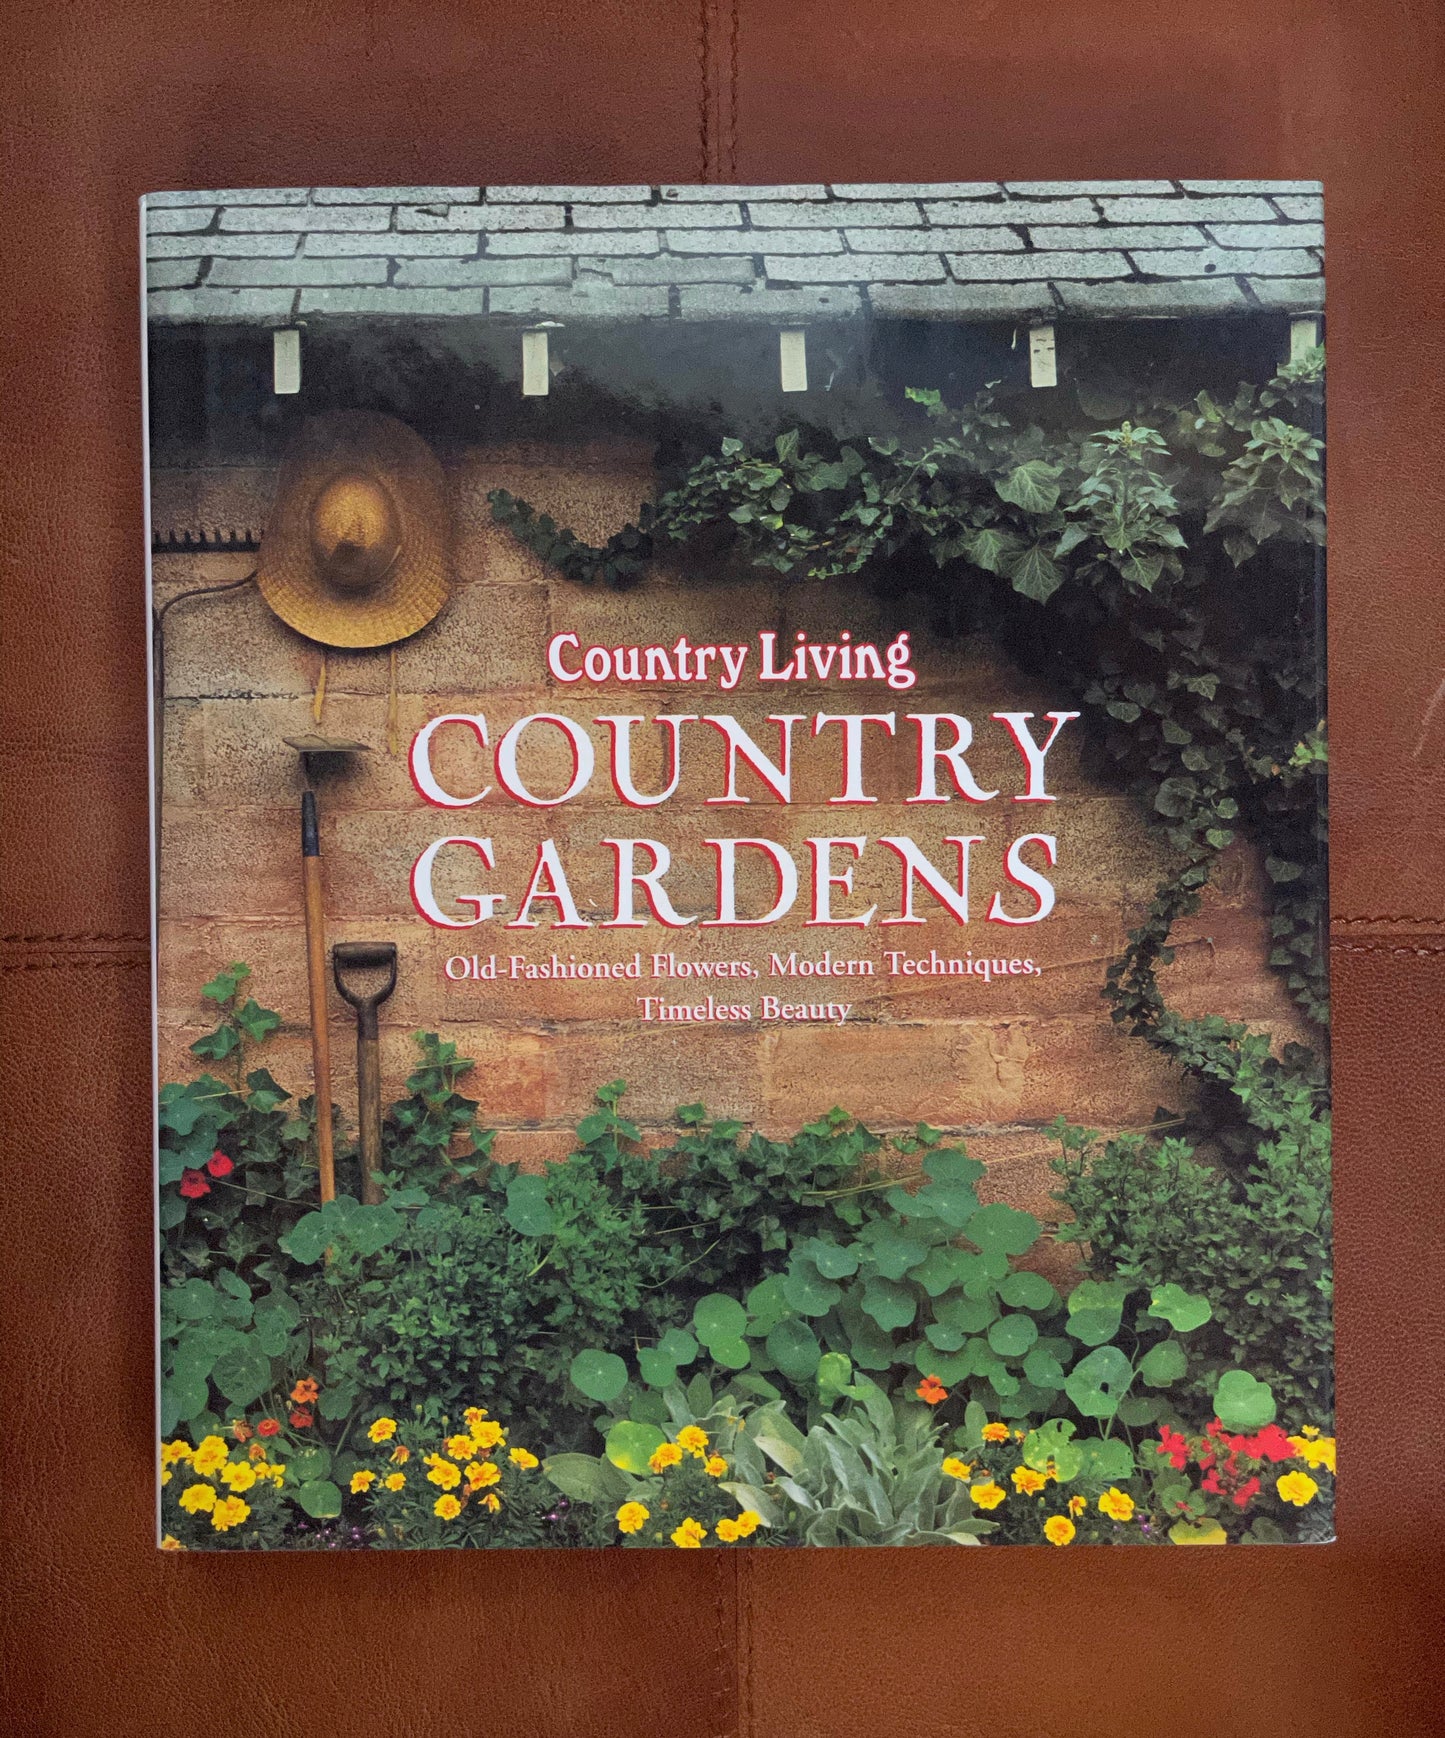 Country Living Country Gardens, garden books